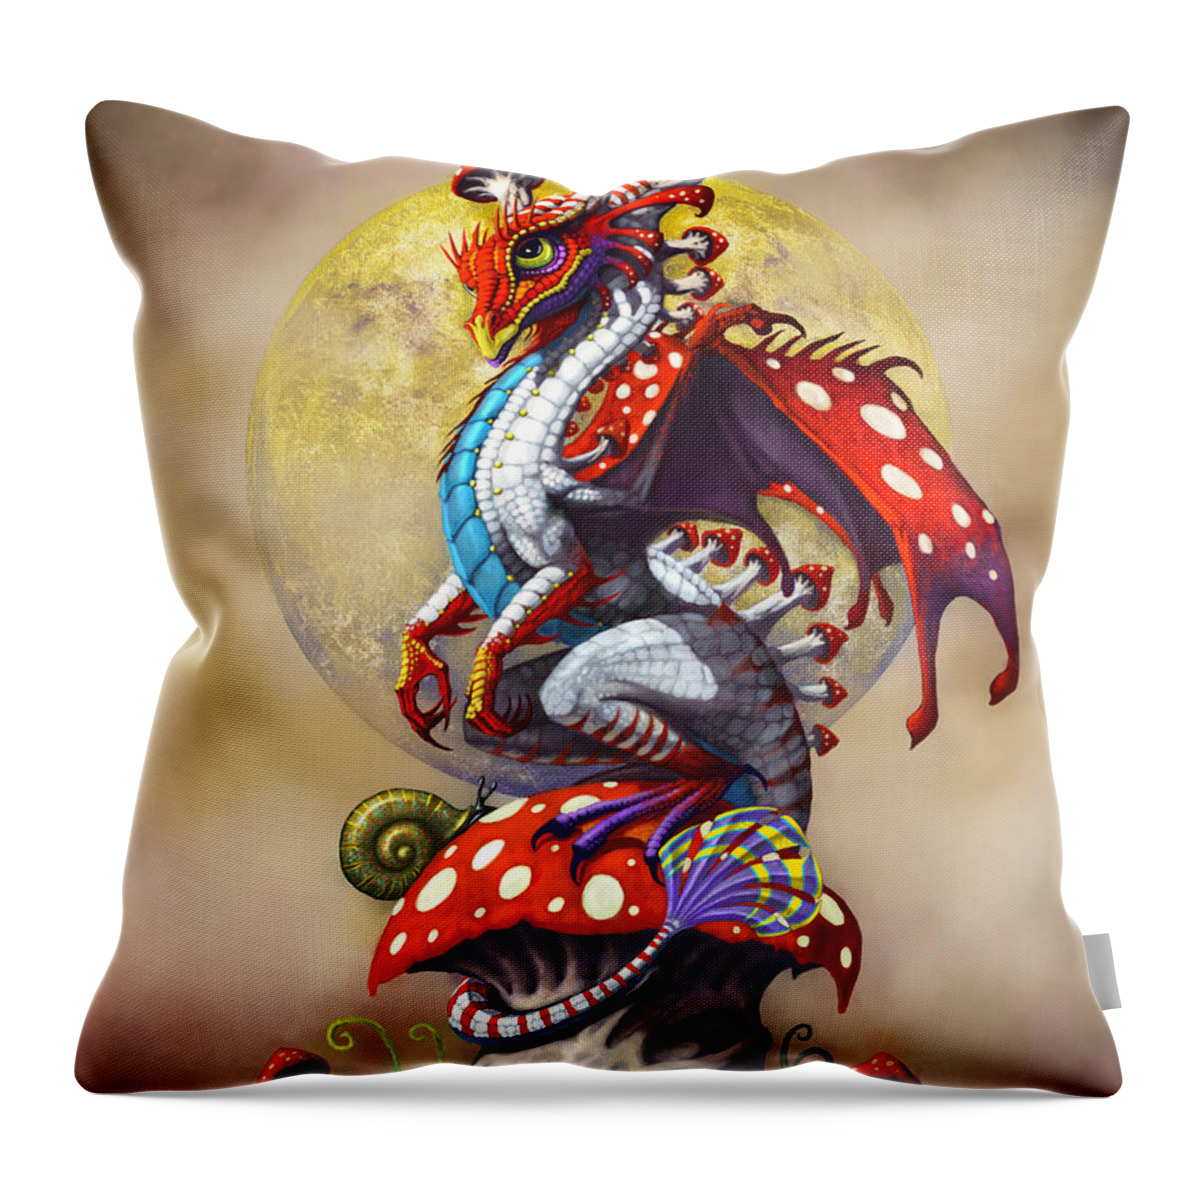 Dragon Throw Pillow featuring the digital art Mushroom Dragon by Stanley Morrison